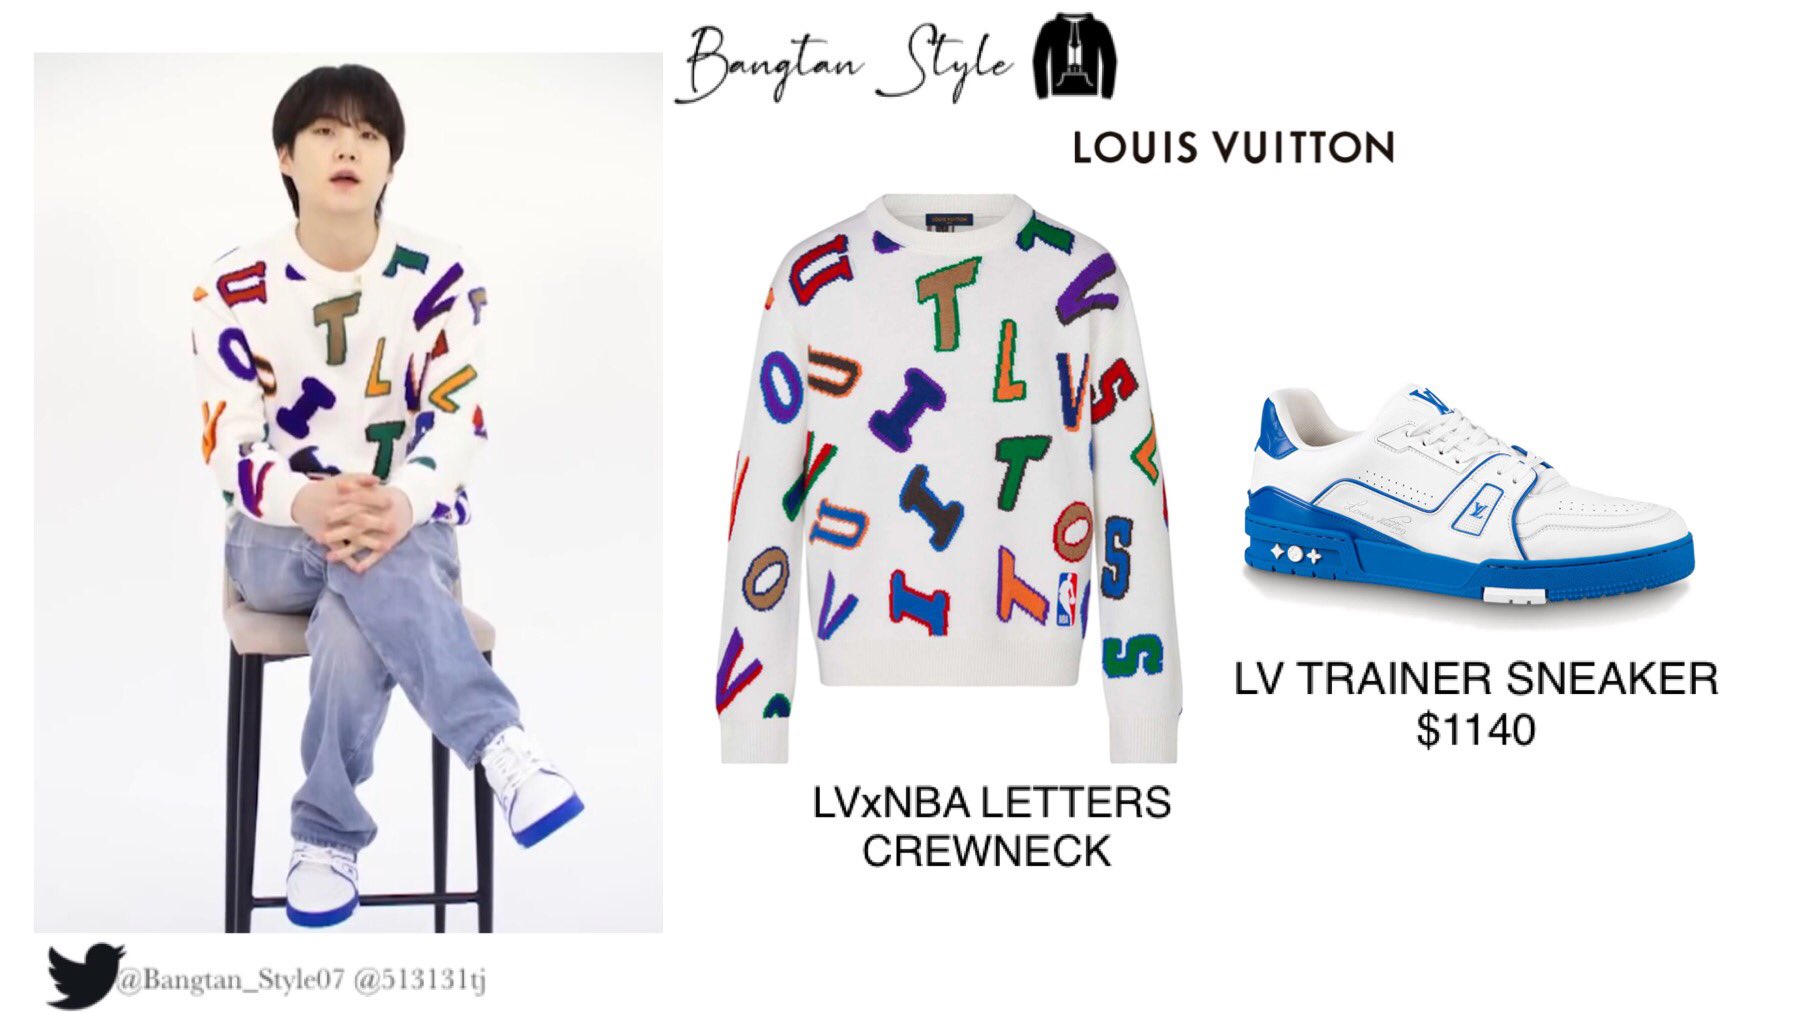 Louis Vuitton on X: #Jin in #LouisVuitton. The @bts_twt member